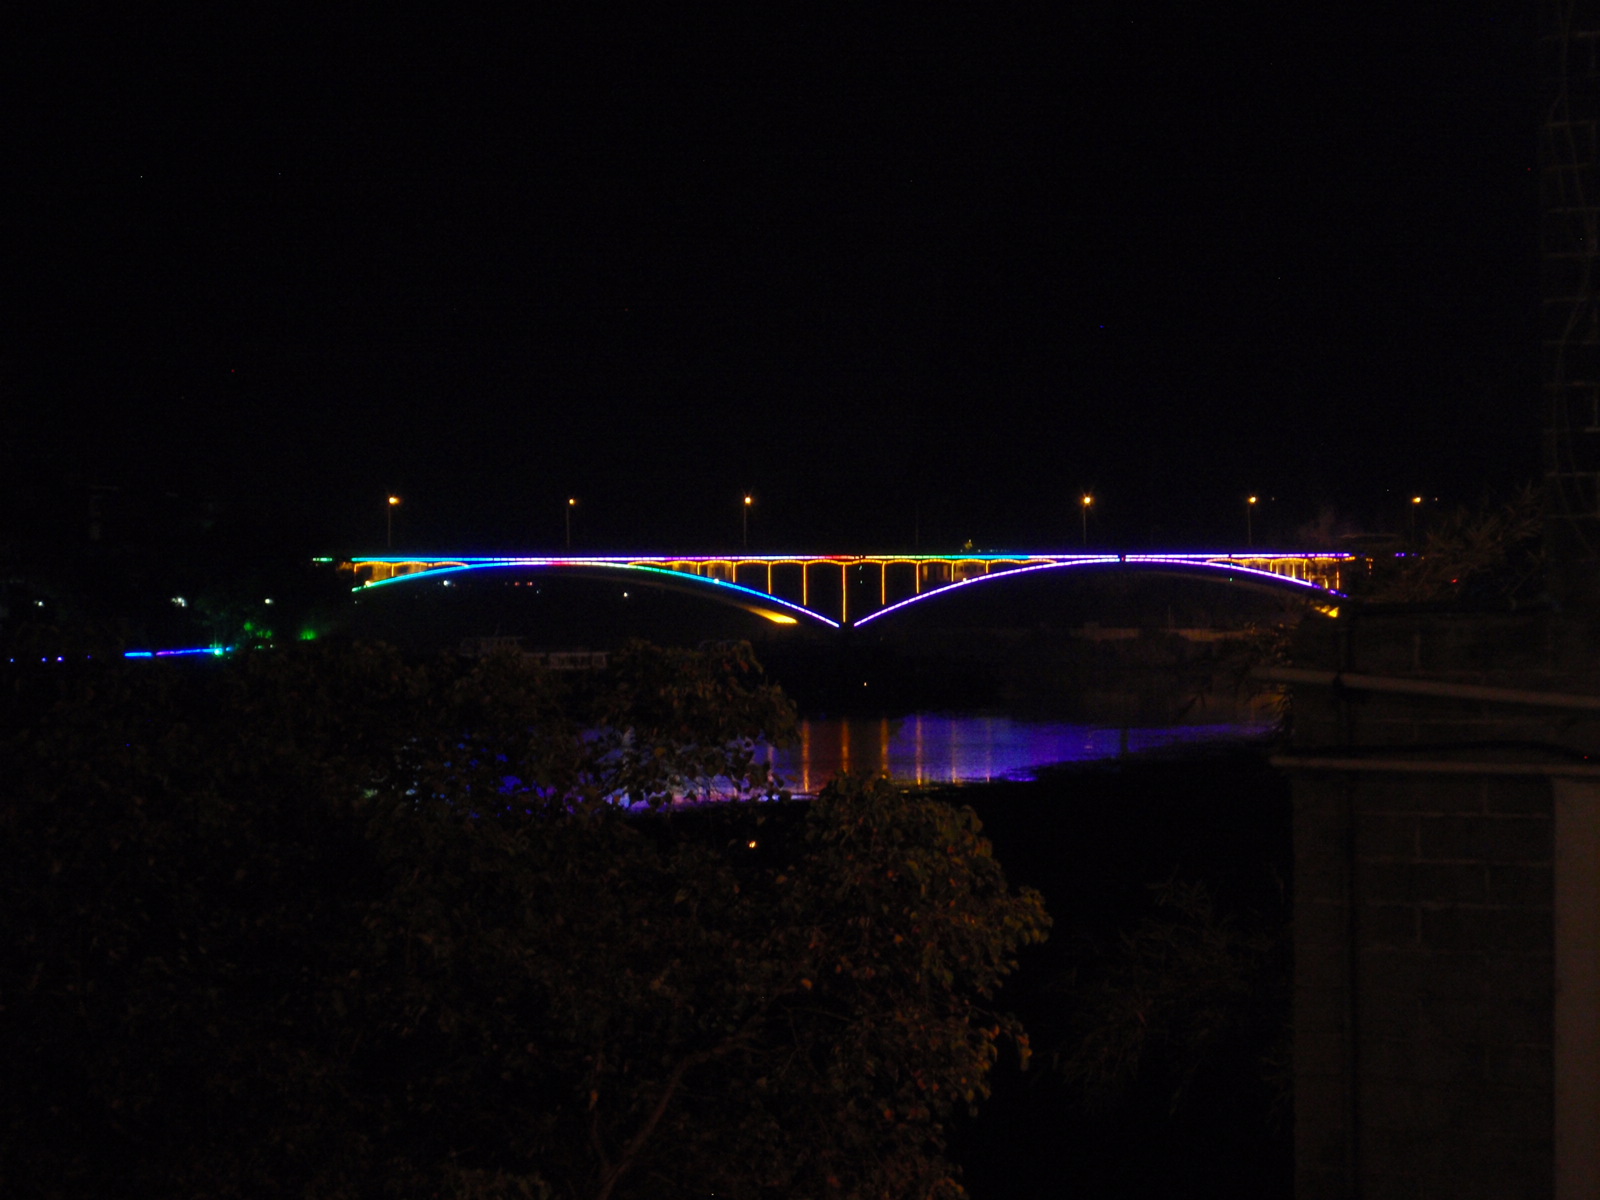 Yangshou bridge has colored night lights.